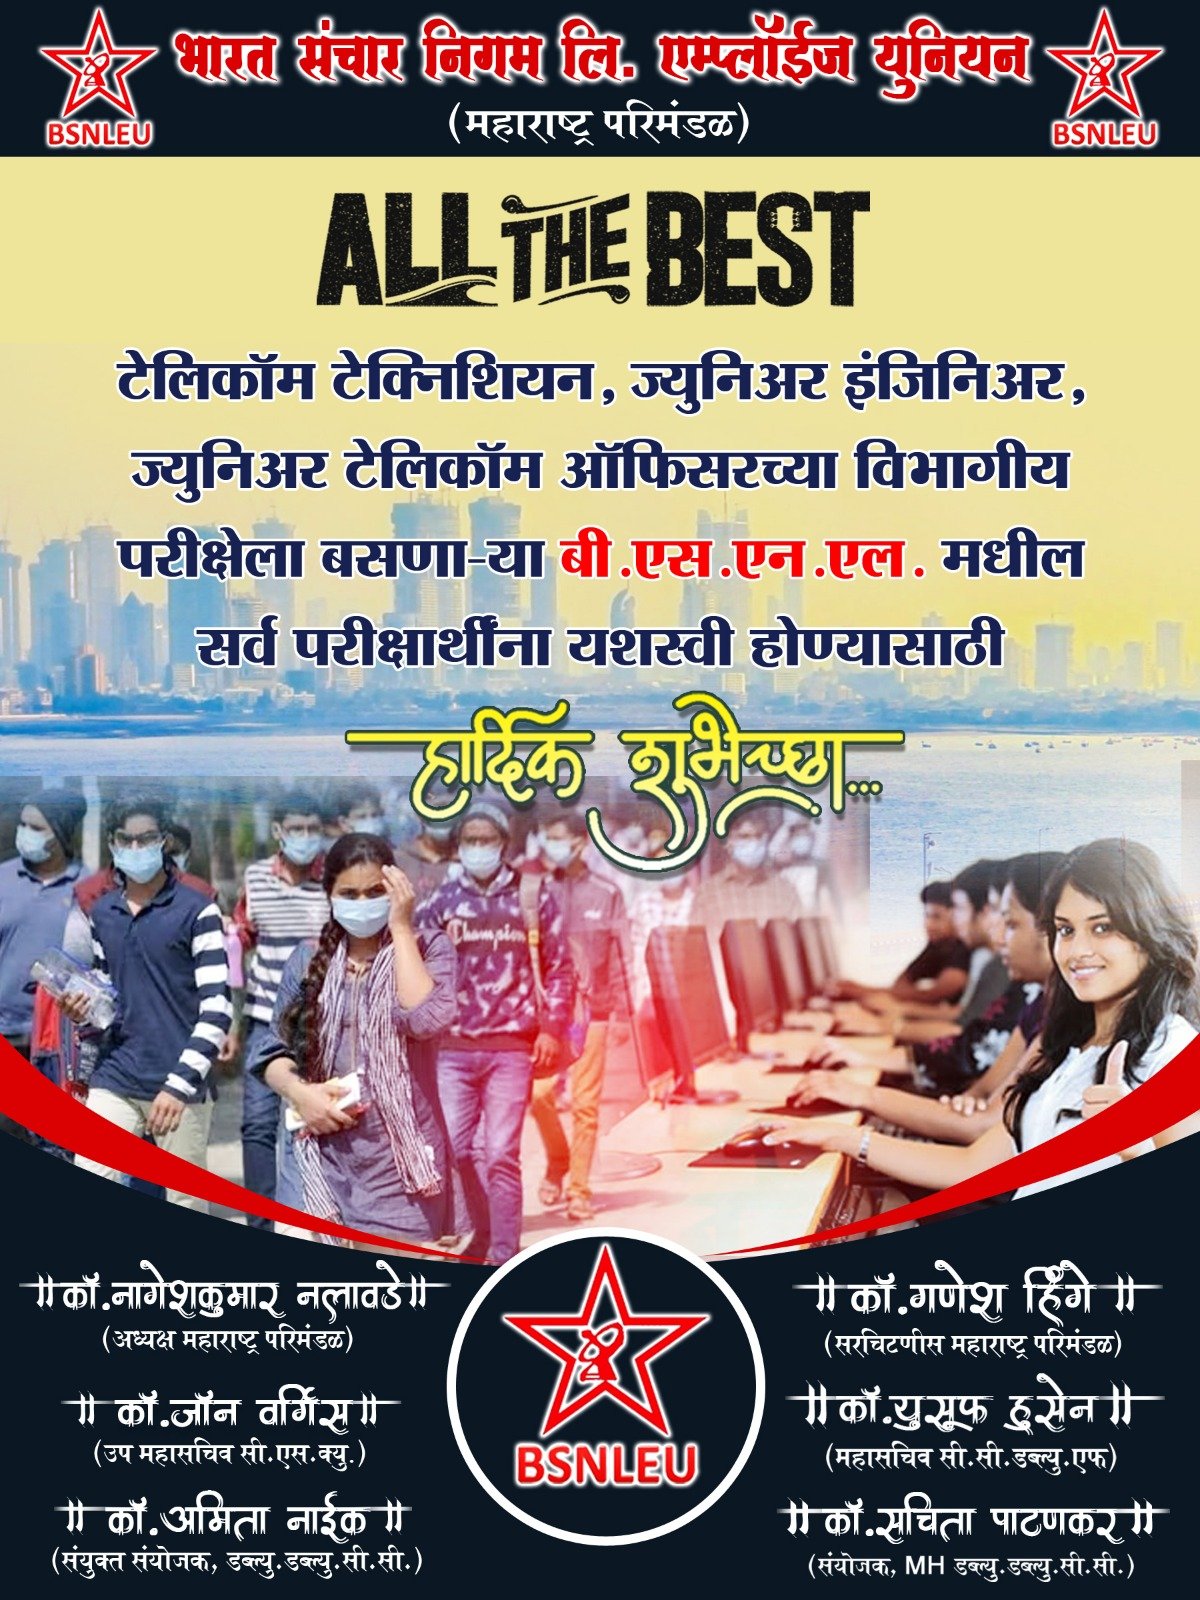  सर्व परीक्षार्थीना BSNLEU महाराष्ट्र तर्फे हार्दिक शुभेच्छा 